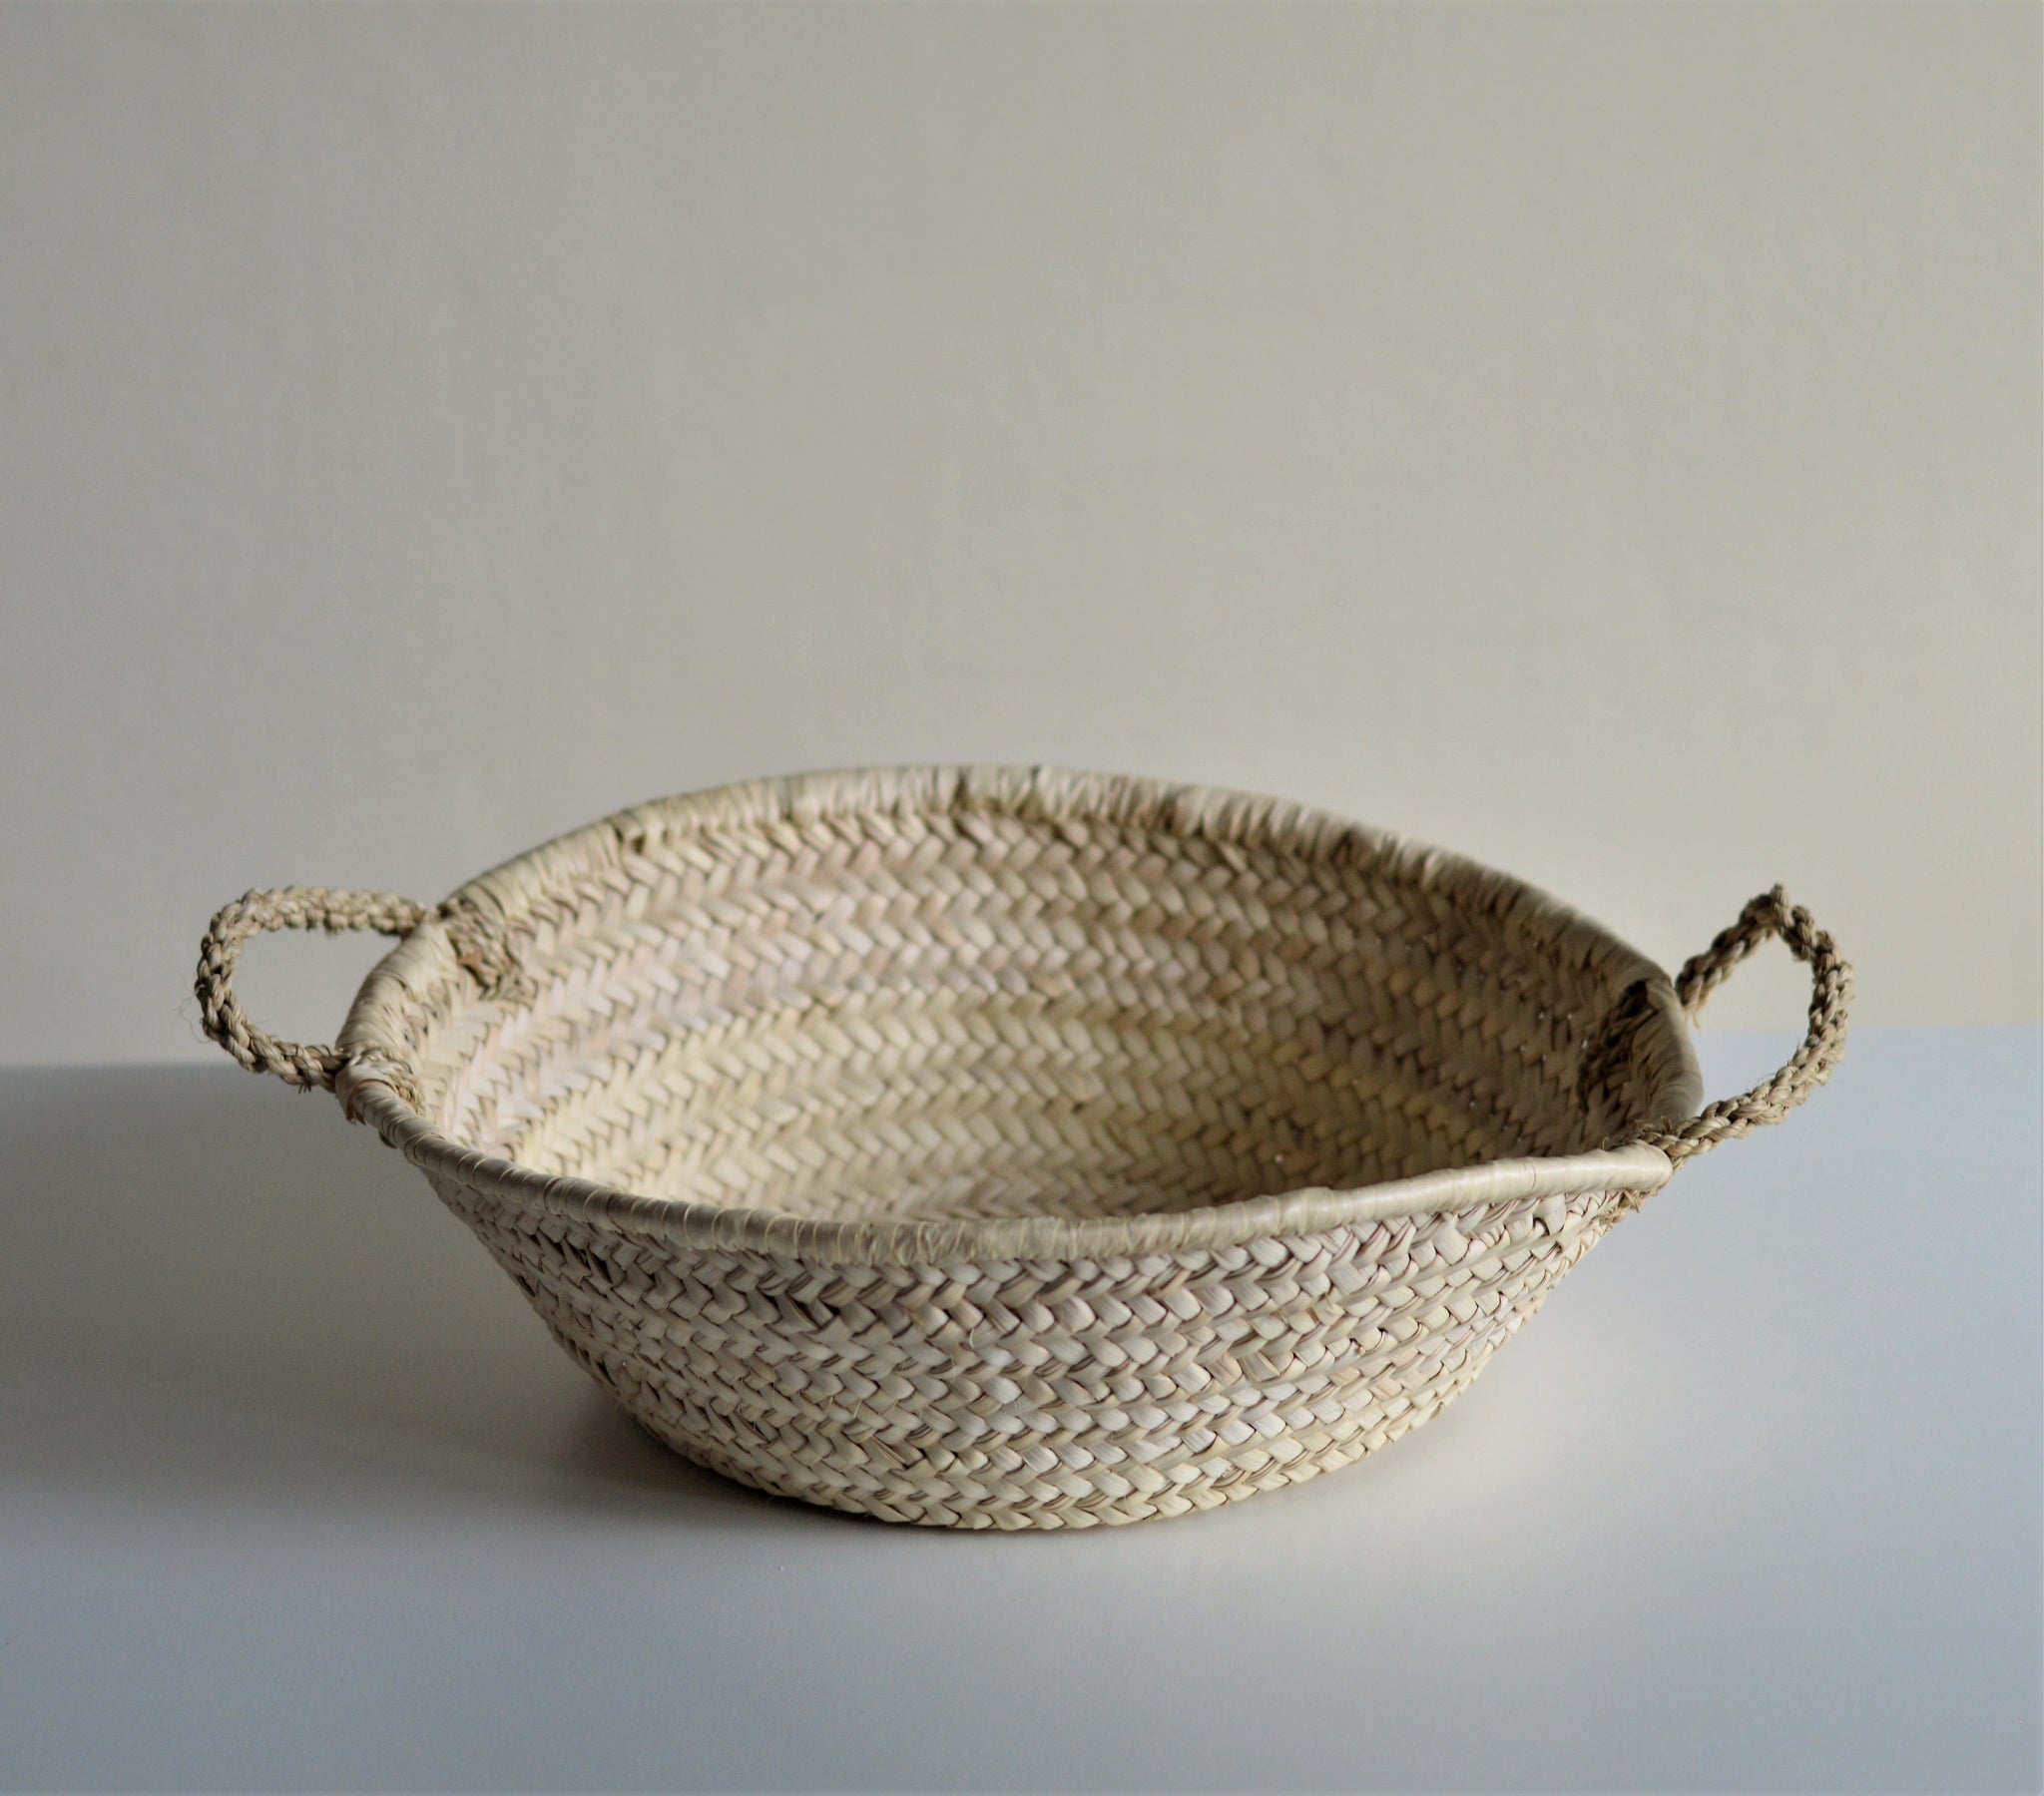 Hand woven Egyptian storage flat round basket - Large size